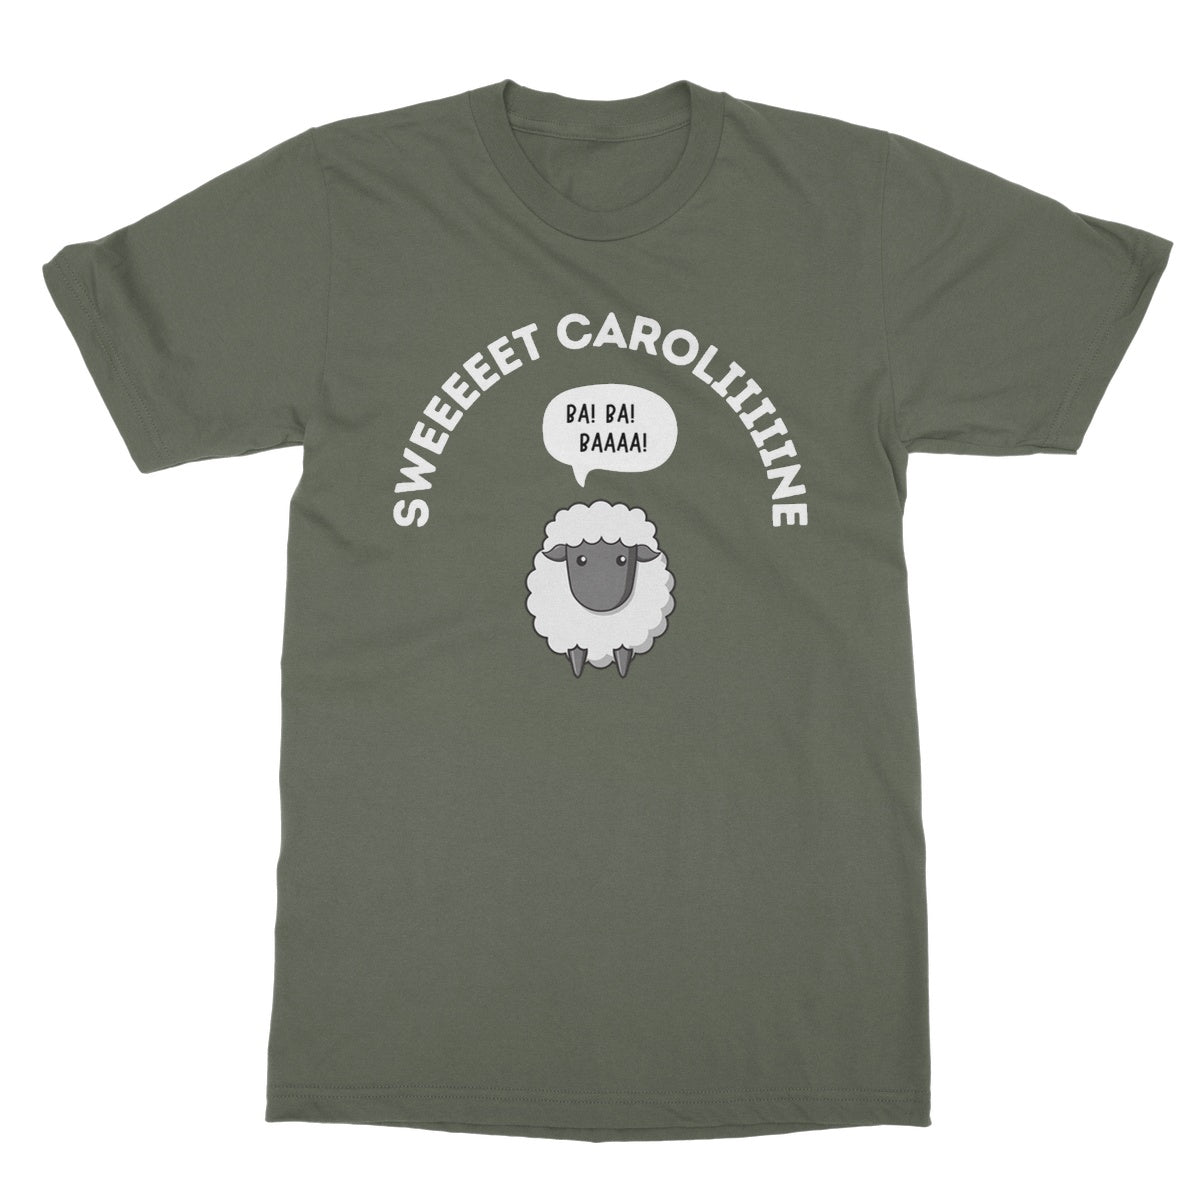 sweet caroline t shirt green